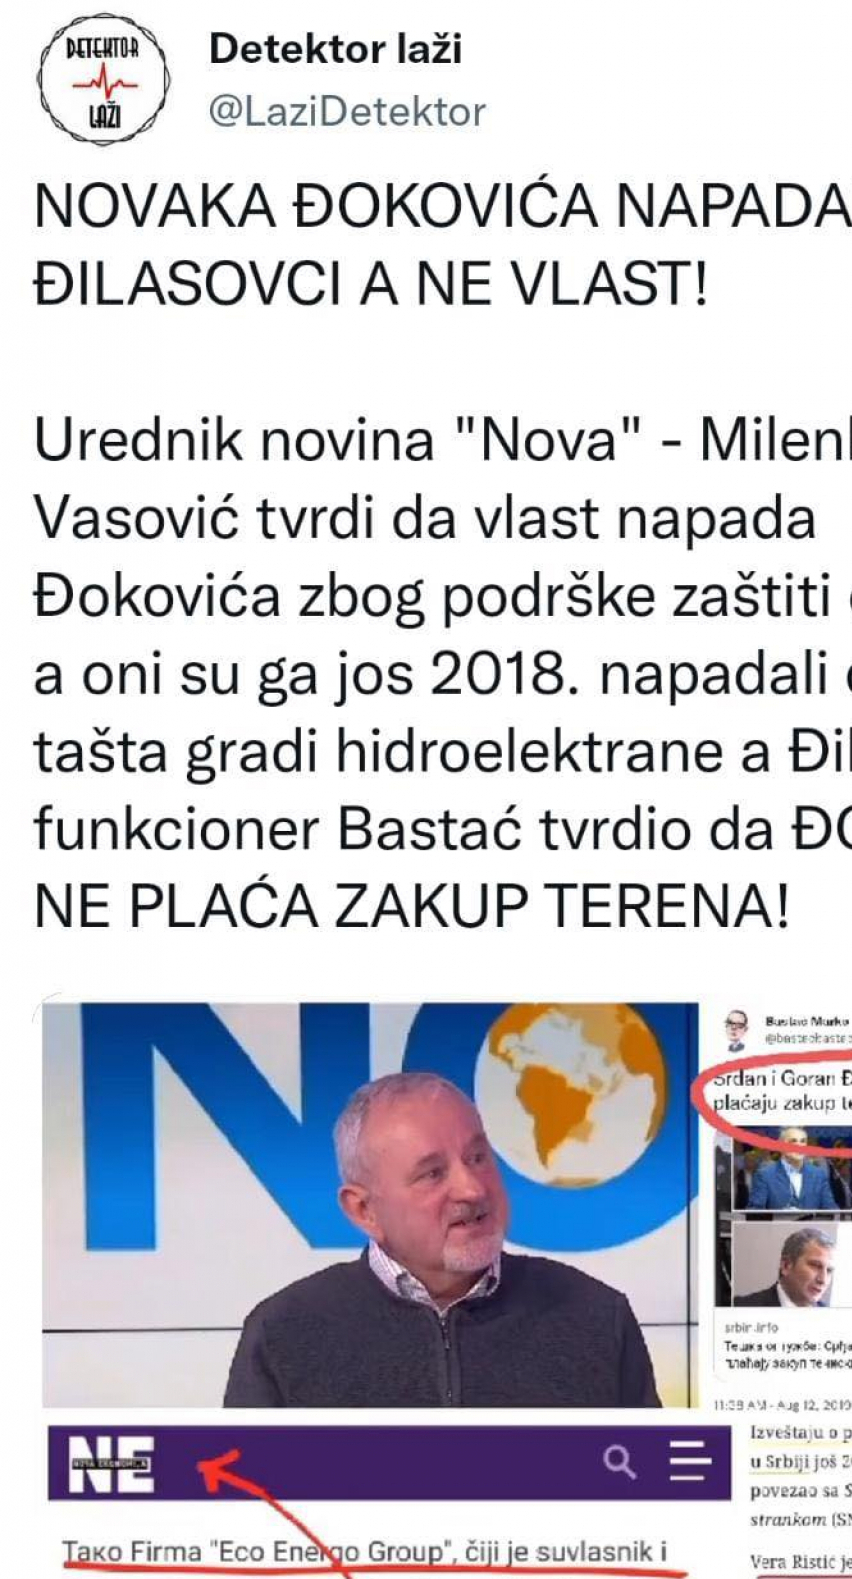 NOVAKA ĐOKOVIĆA NAPADALI ĐILASOVCI A NE VLAST! Urednik đilasovskog portala tvrdi da vlast napda srpskog tenisera, a oni ga sramno napadali još 2018. godine! (VIDEO)